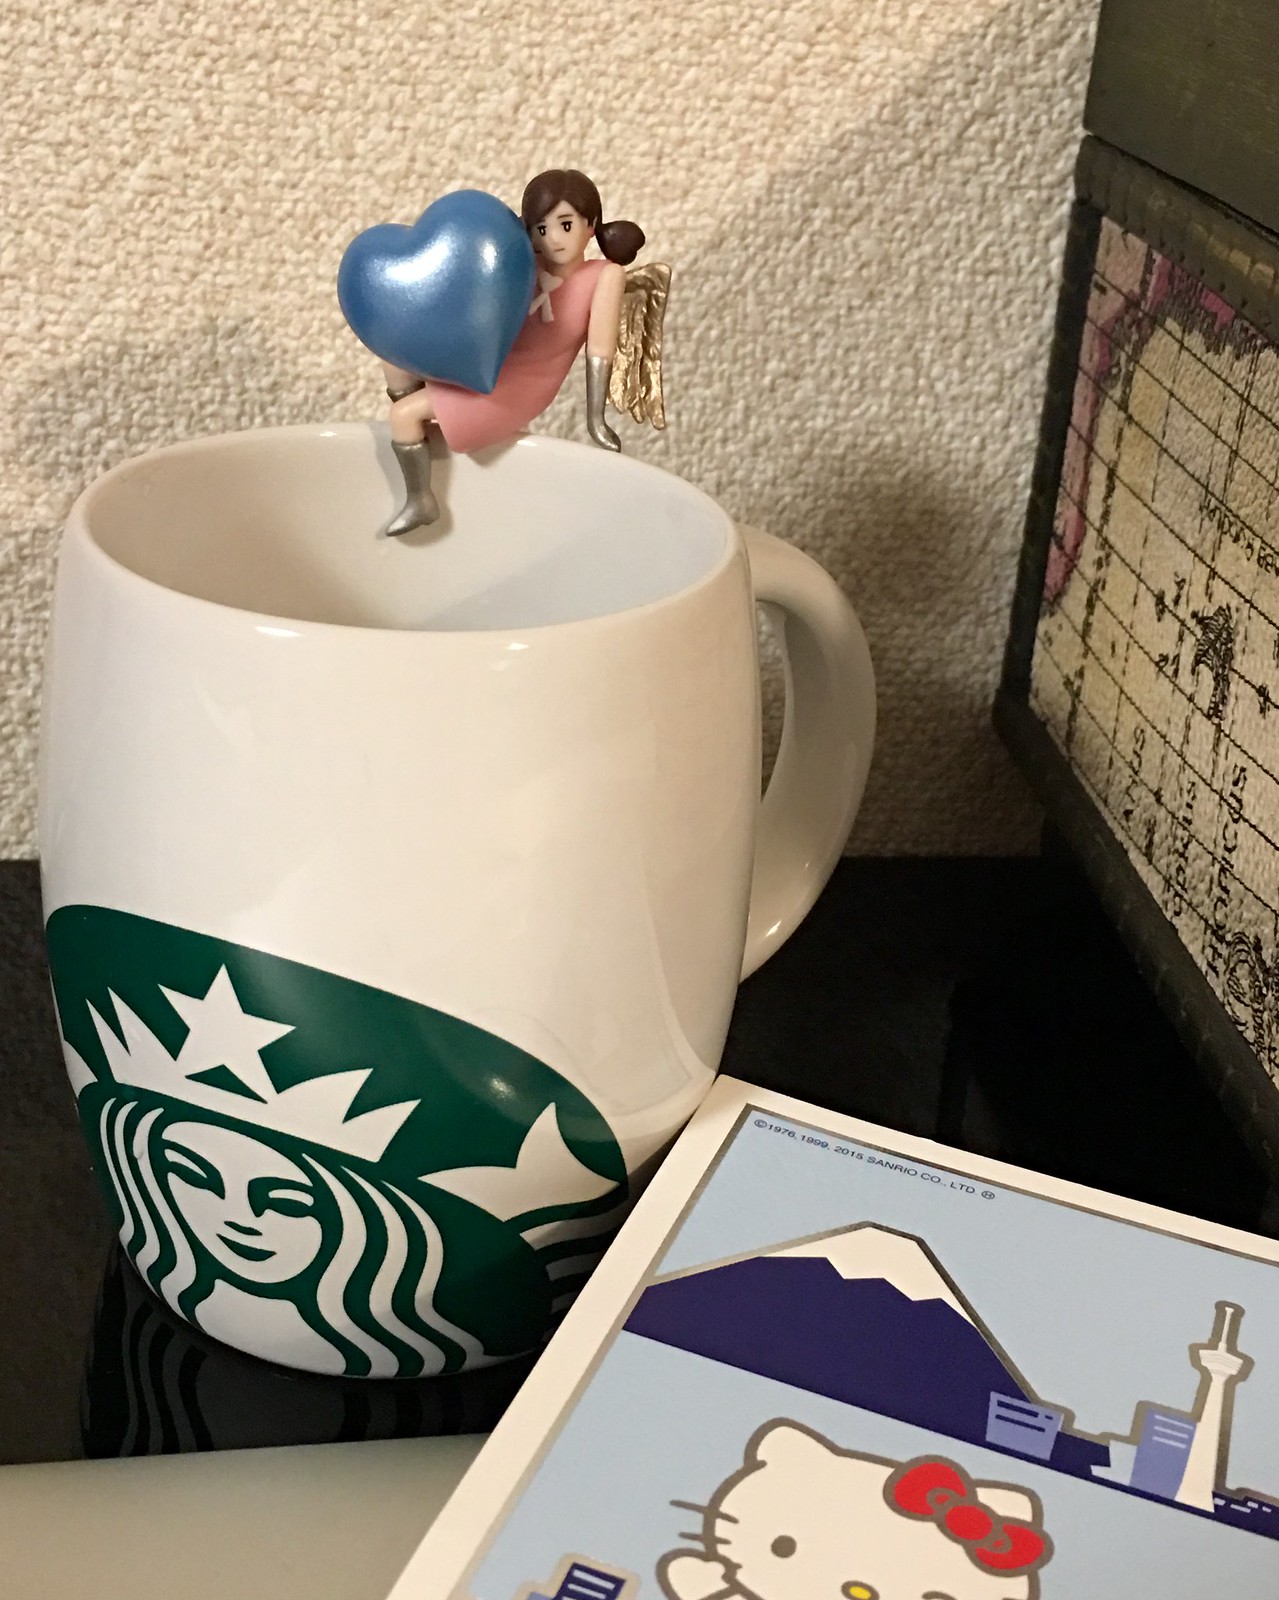 Fuchiko on a cup